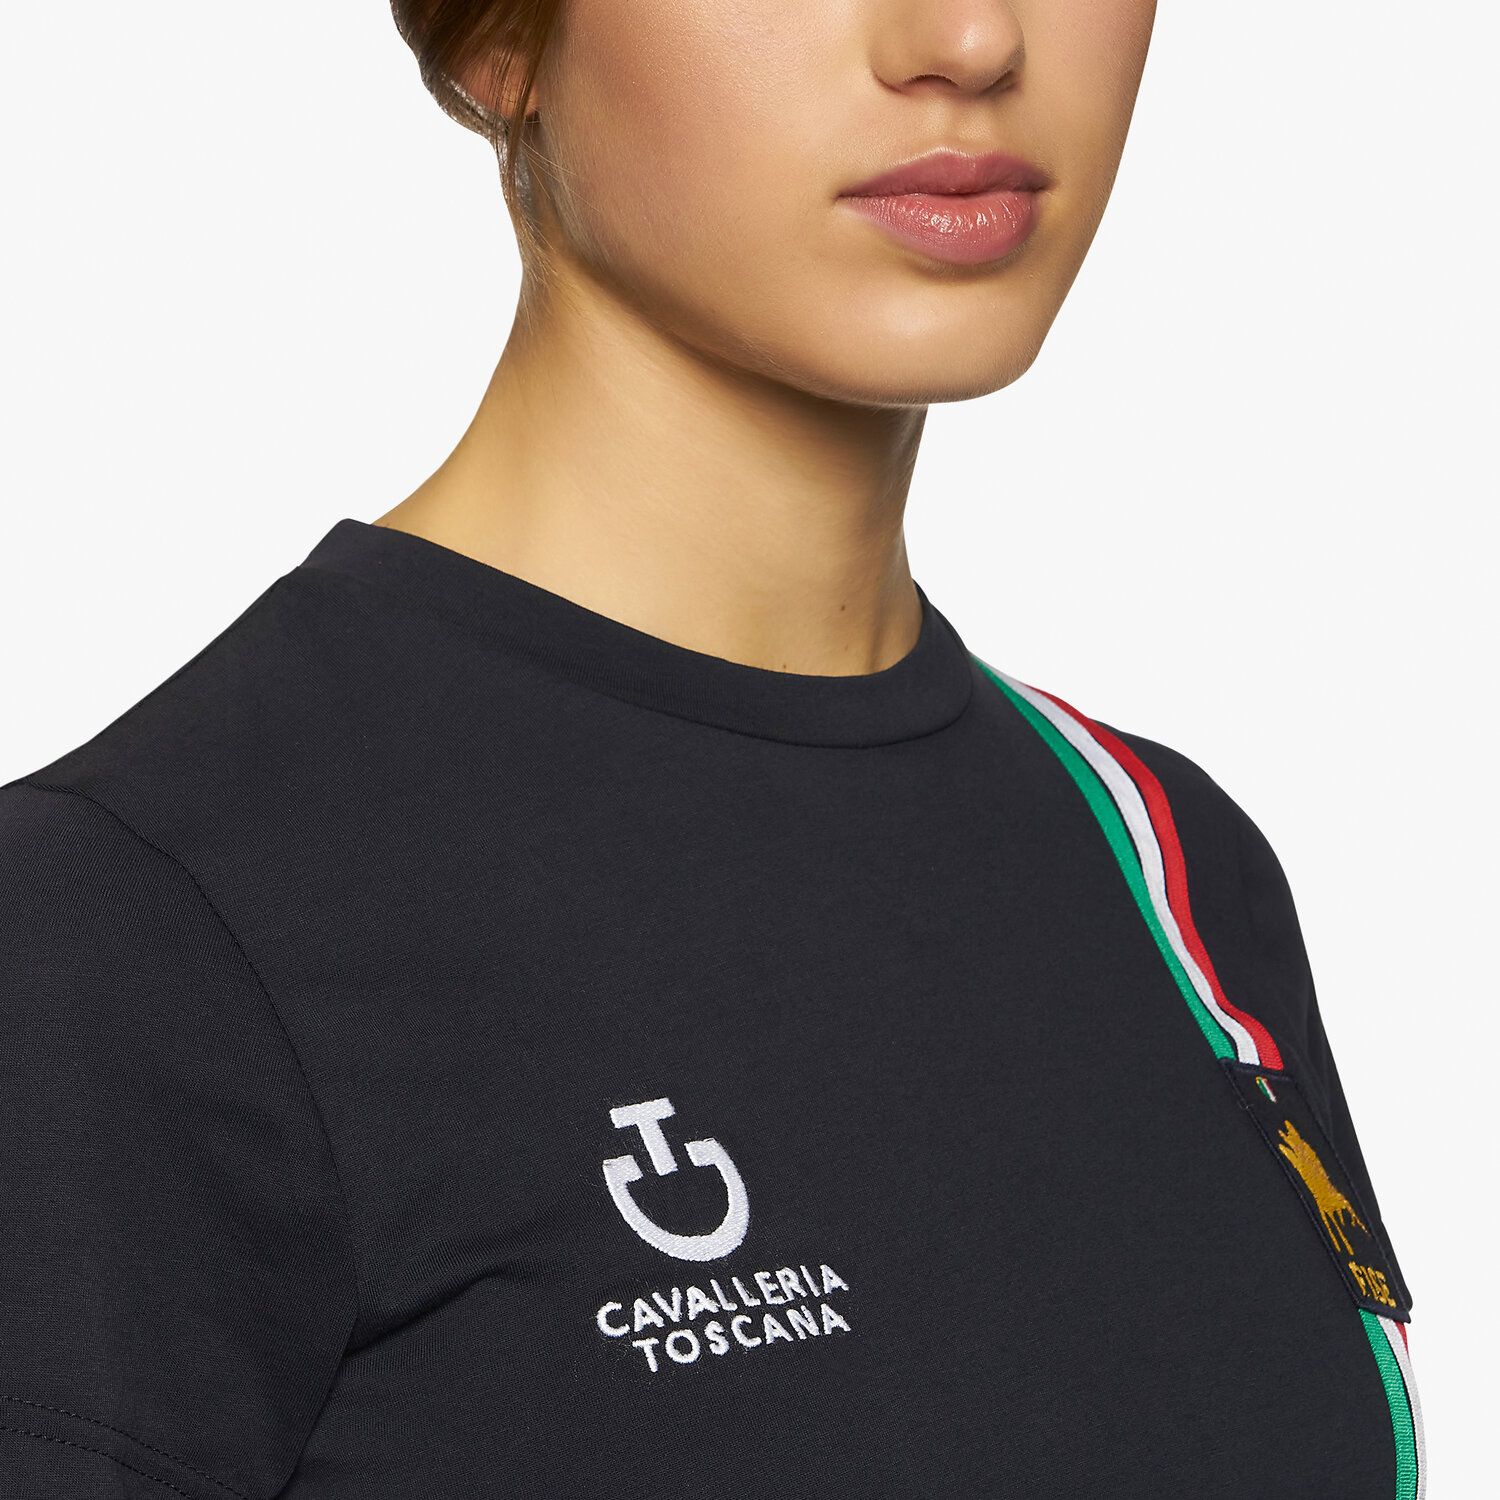 Cavalleria Toscana Women's FISE short sleeved t-shirt NAVY-5